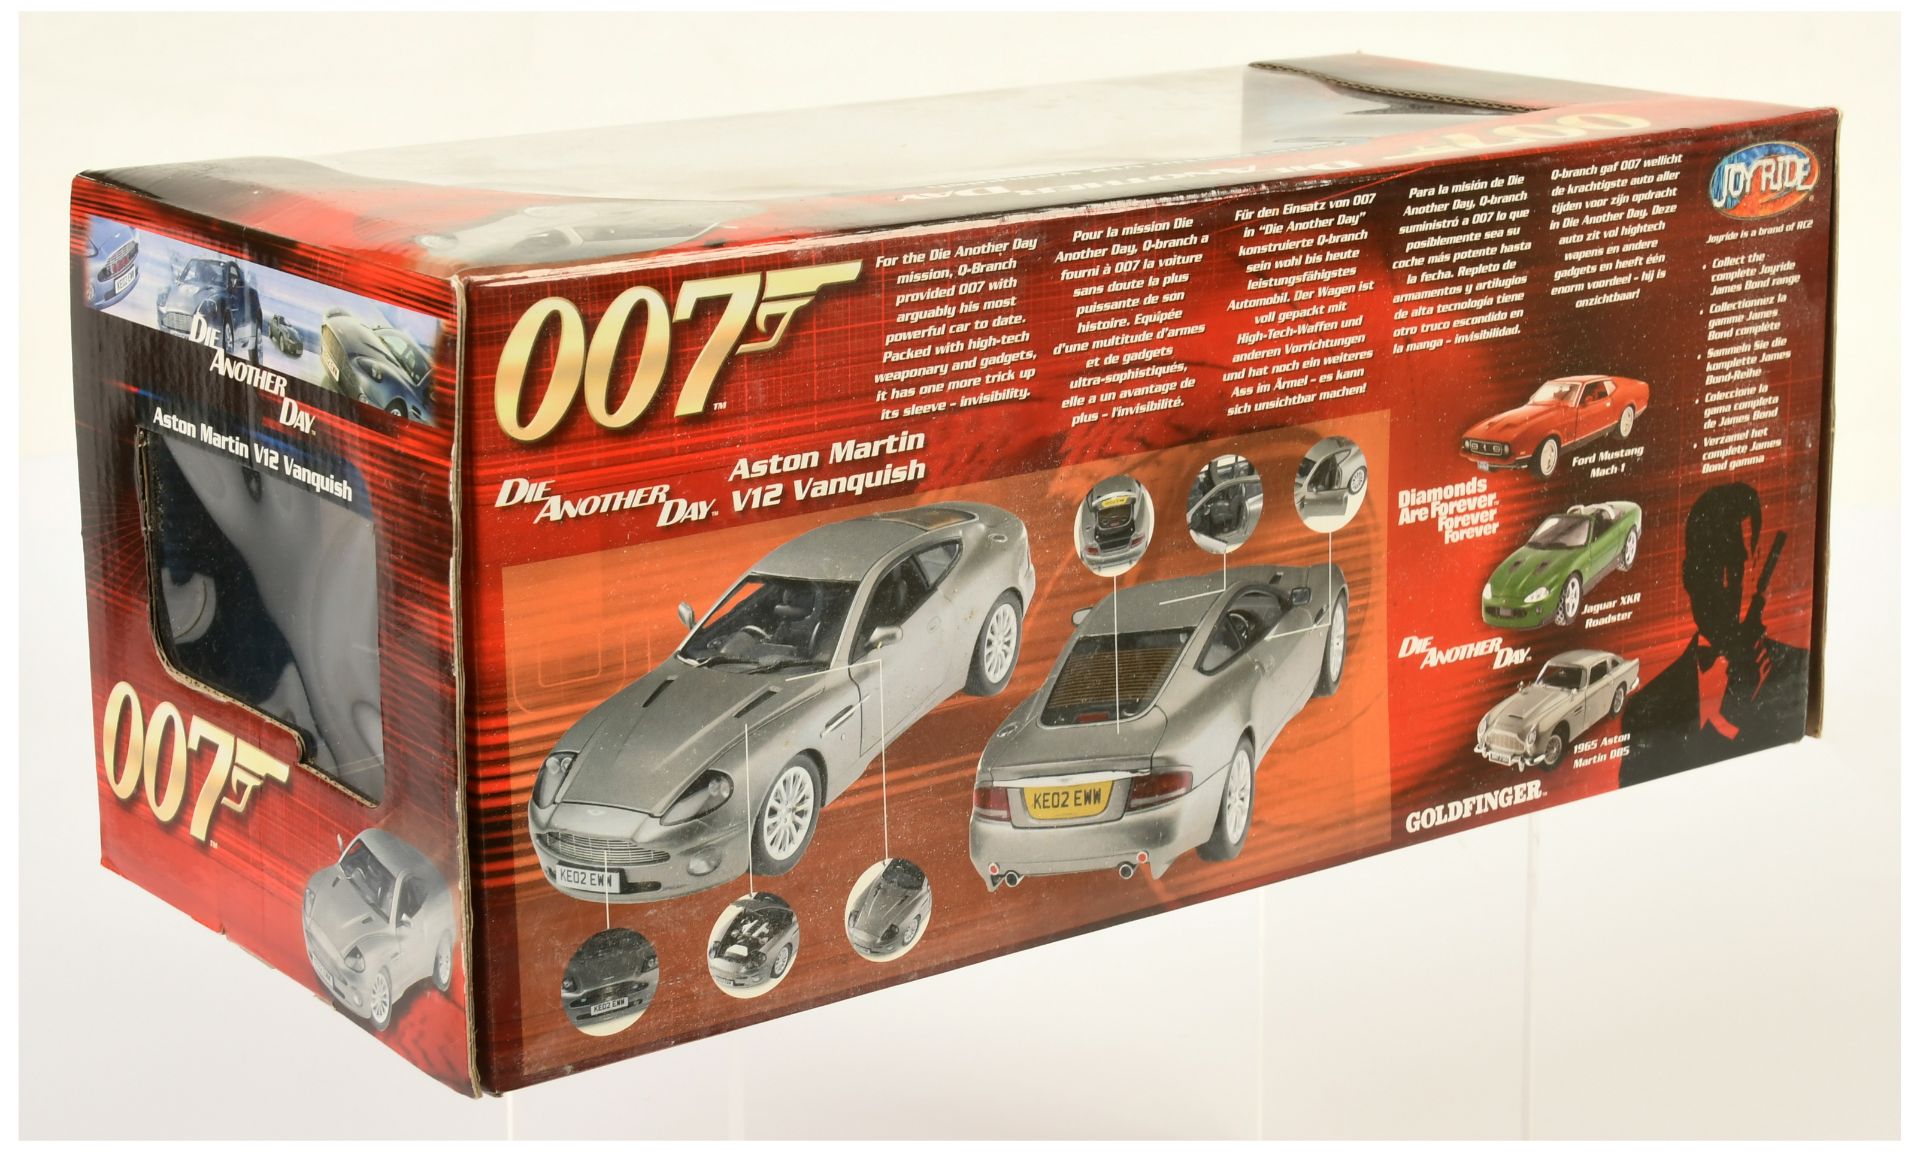 Joyride James Bond 007 Aston Martin V12 Vanquish - Image 2 of 2